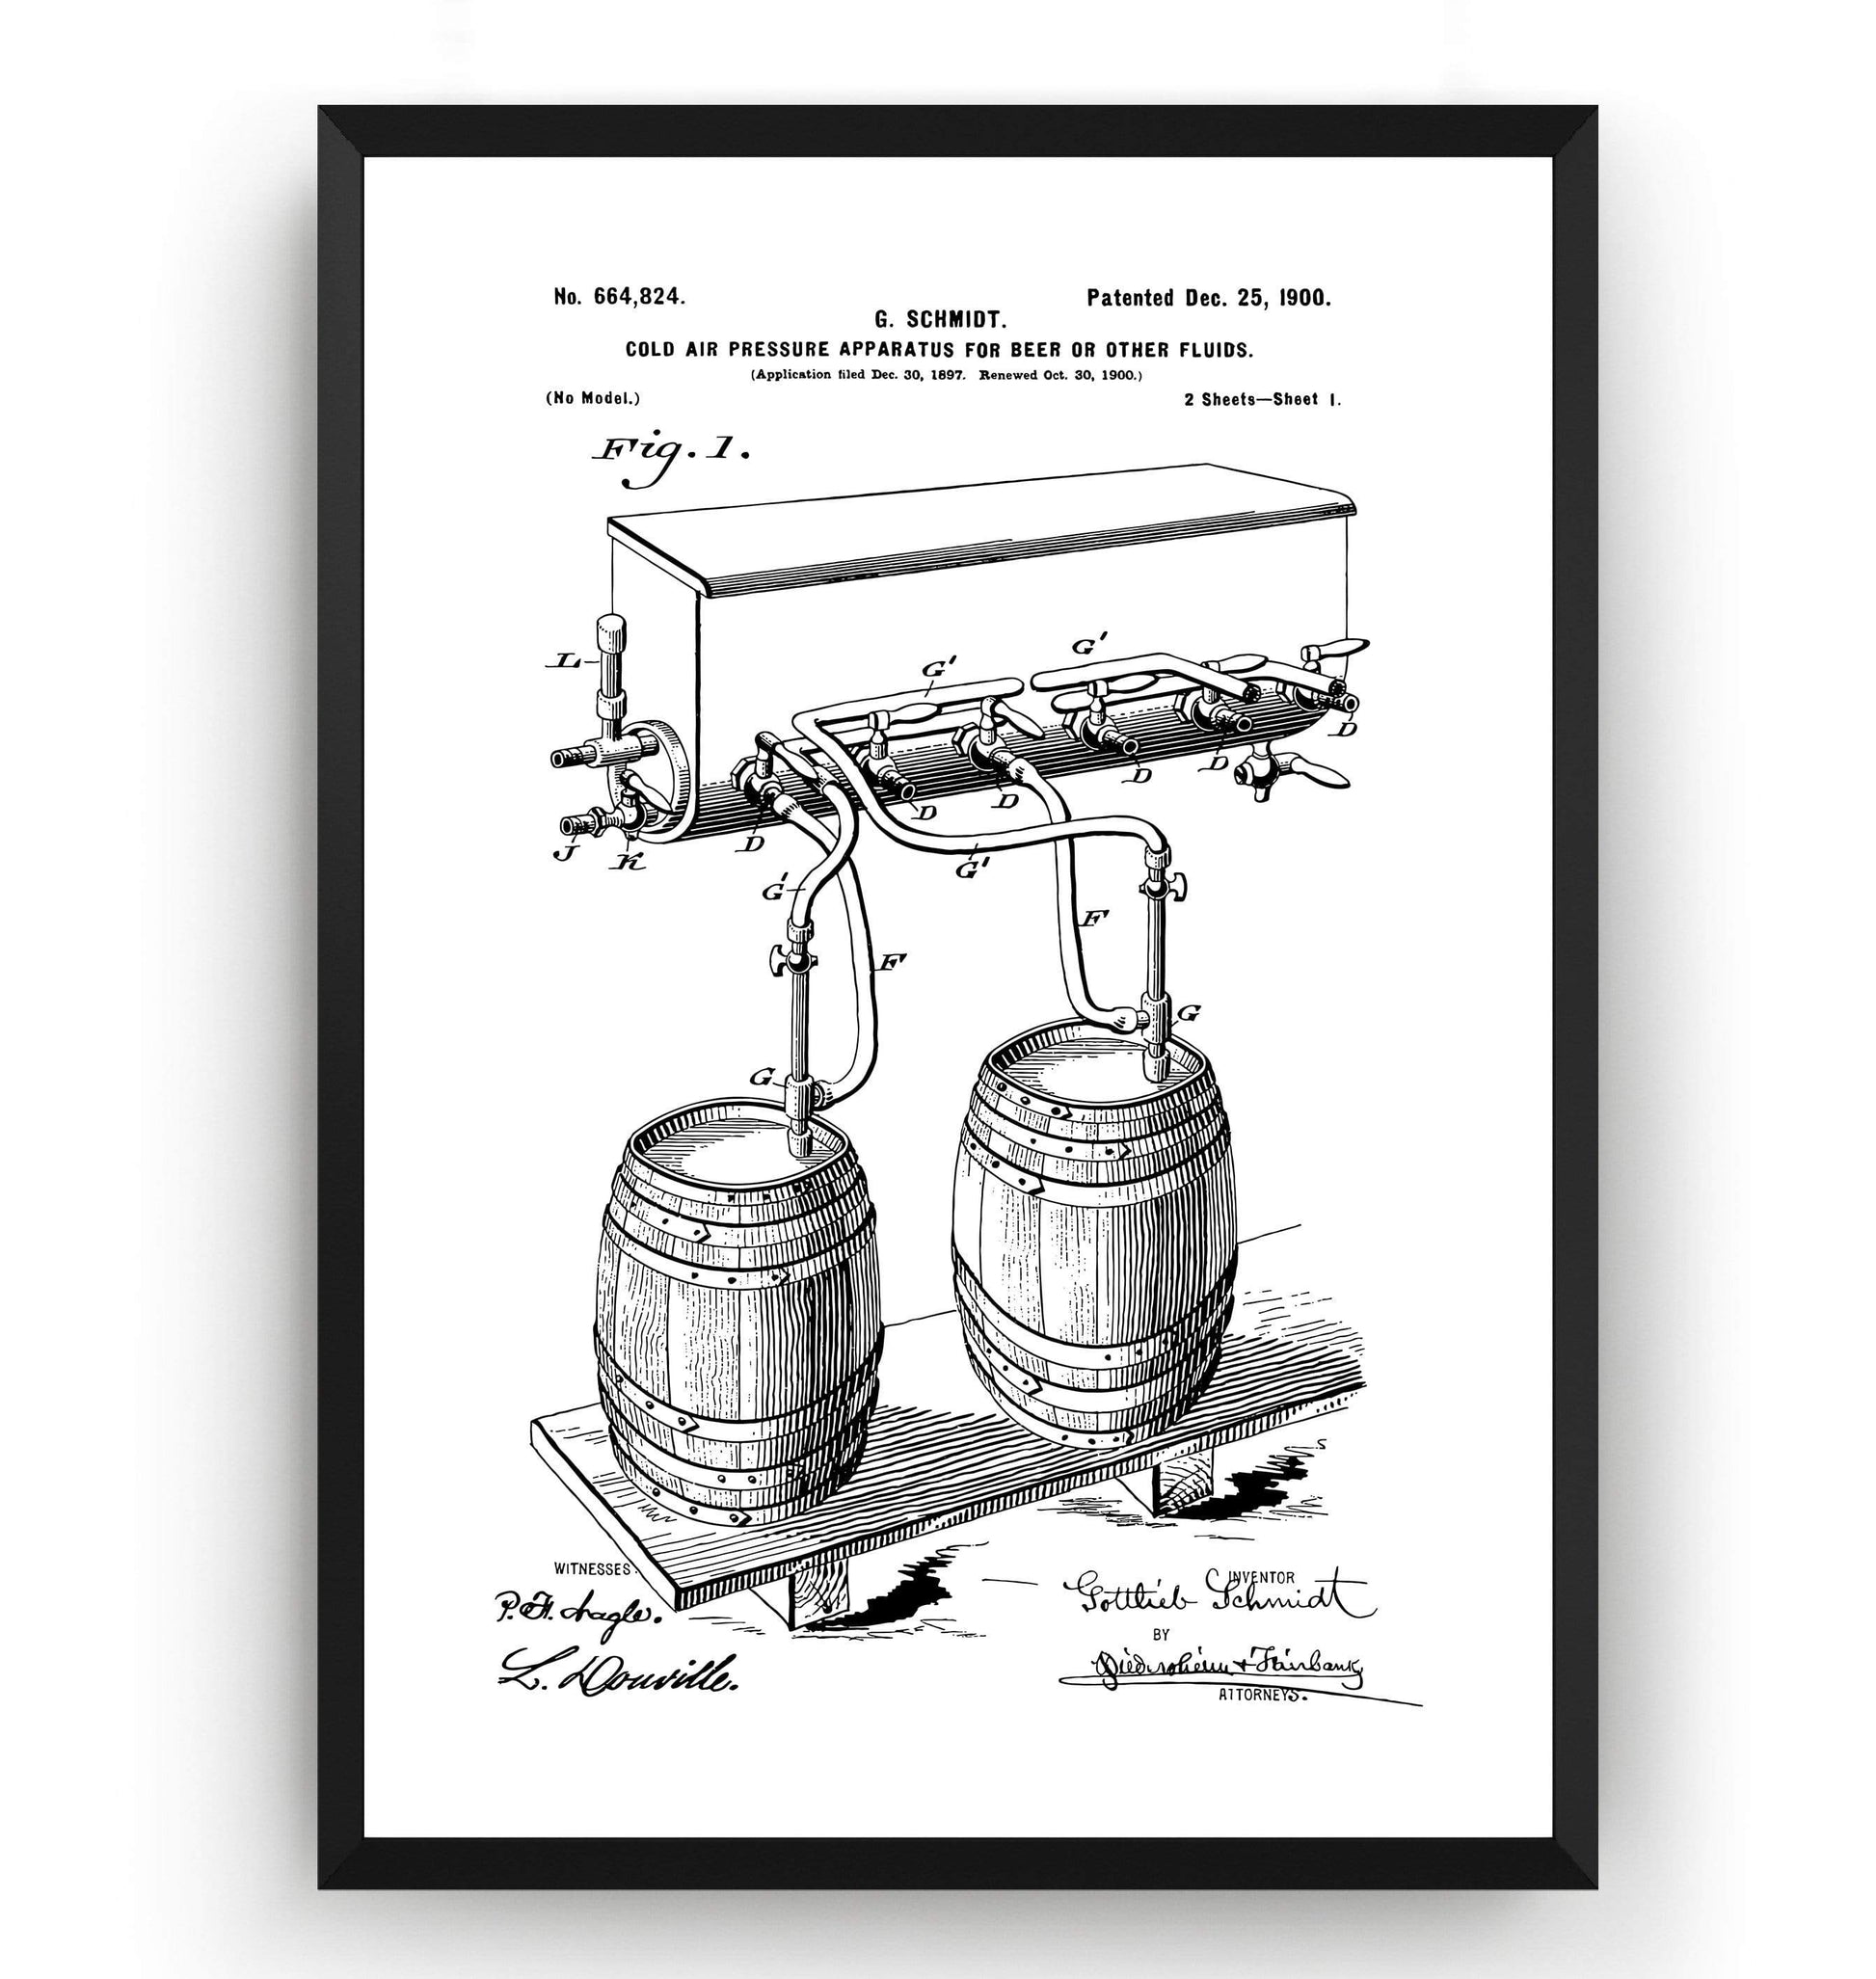 Cold Air Pressure Apparatus For Beer Brewing Patent Print - Magic Posters